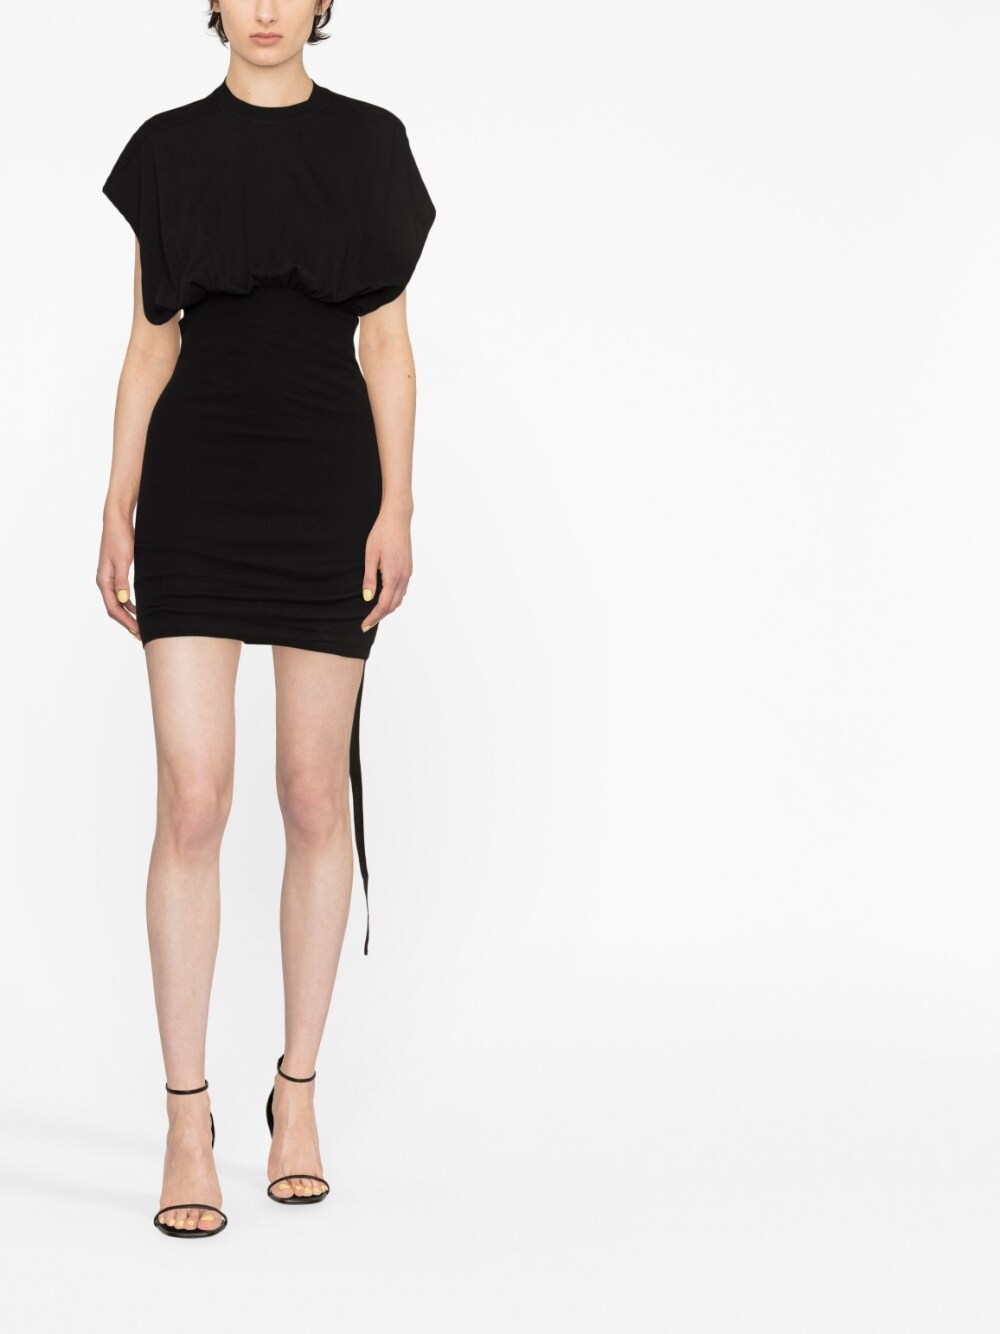 Black tommy mini dress - women